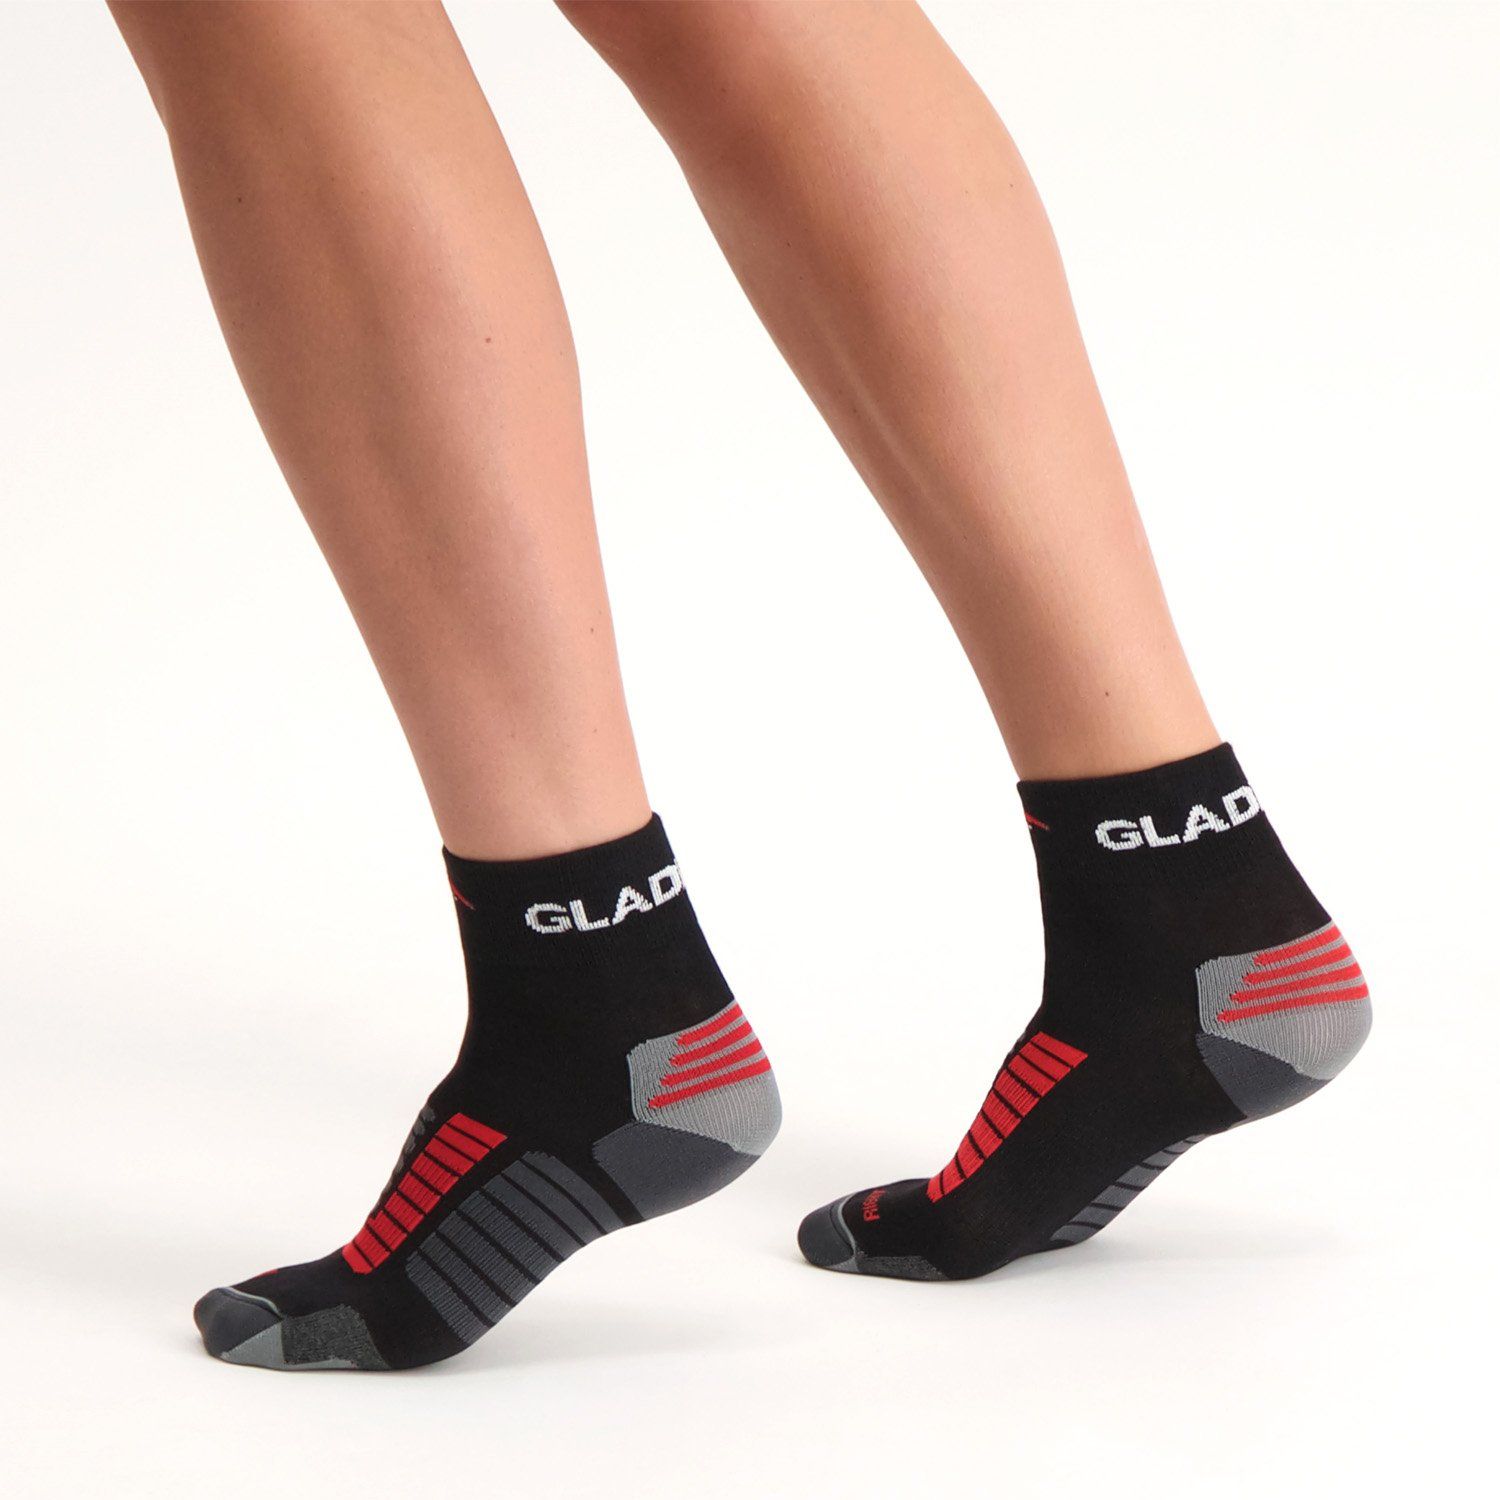 Gladiator Sports Compression Socks side view